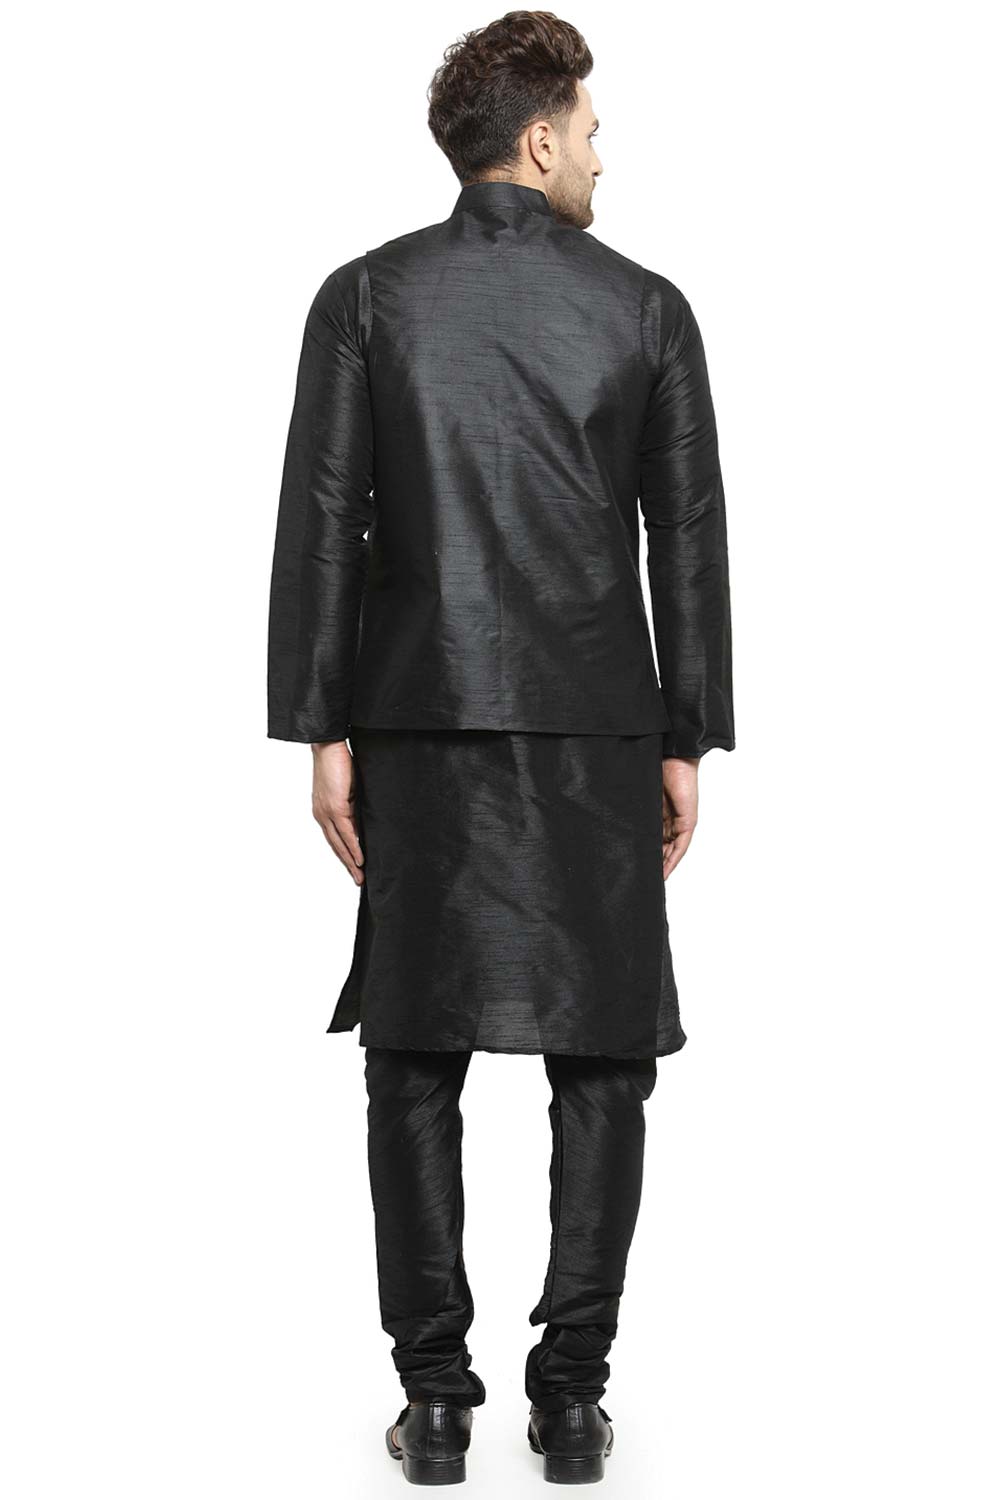 Buy Men's Black Silk Blend Solid Men's Kurta Pajama Jacket Set Online